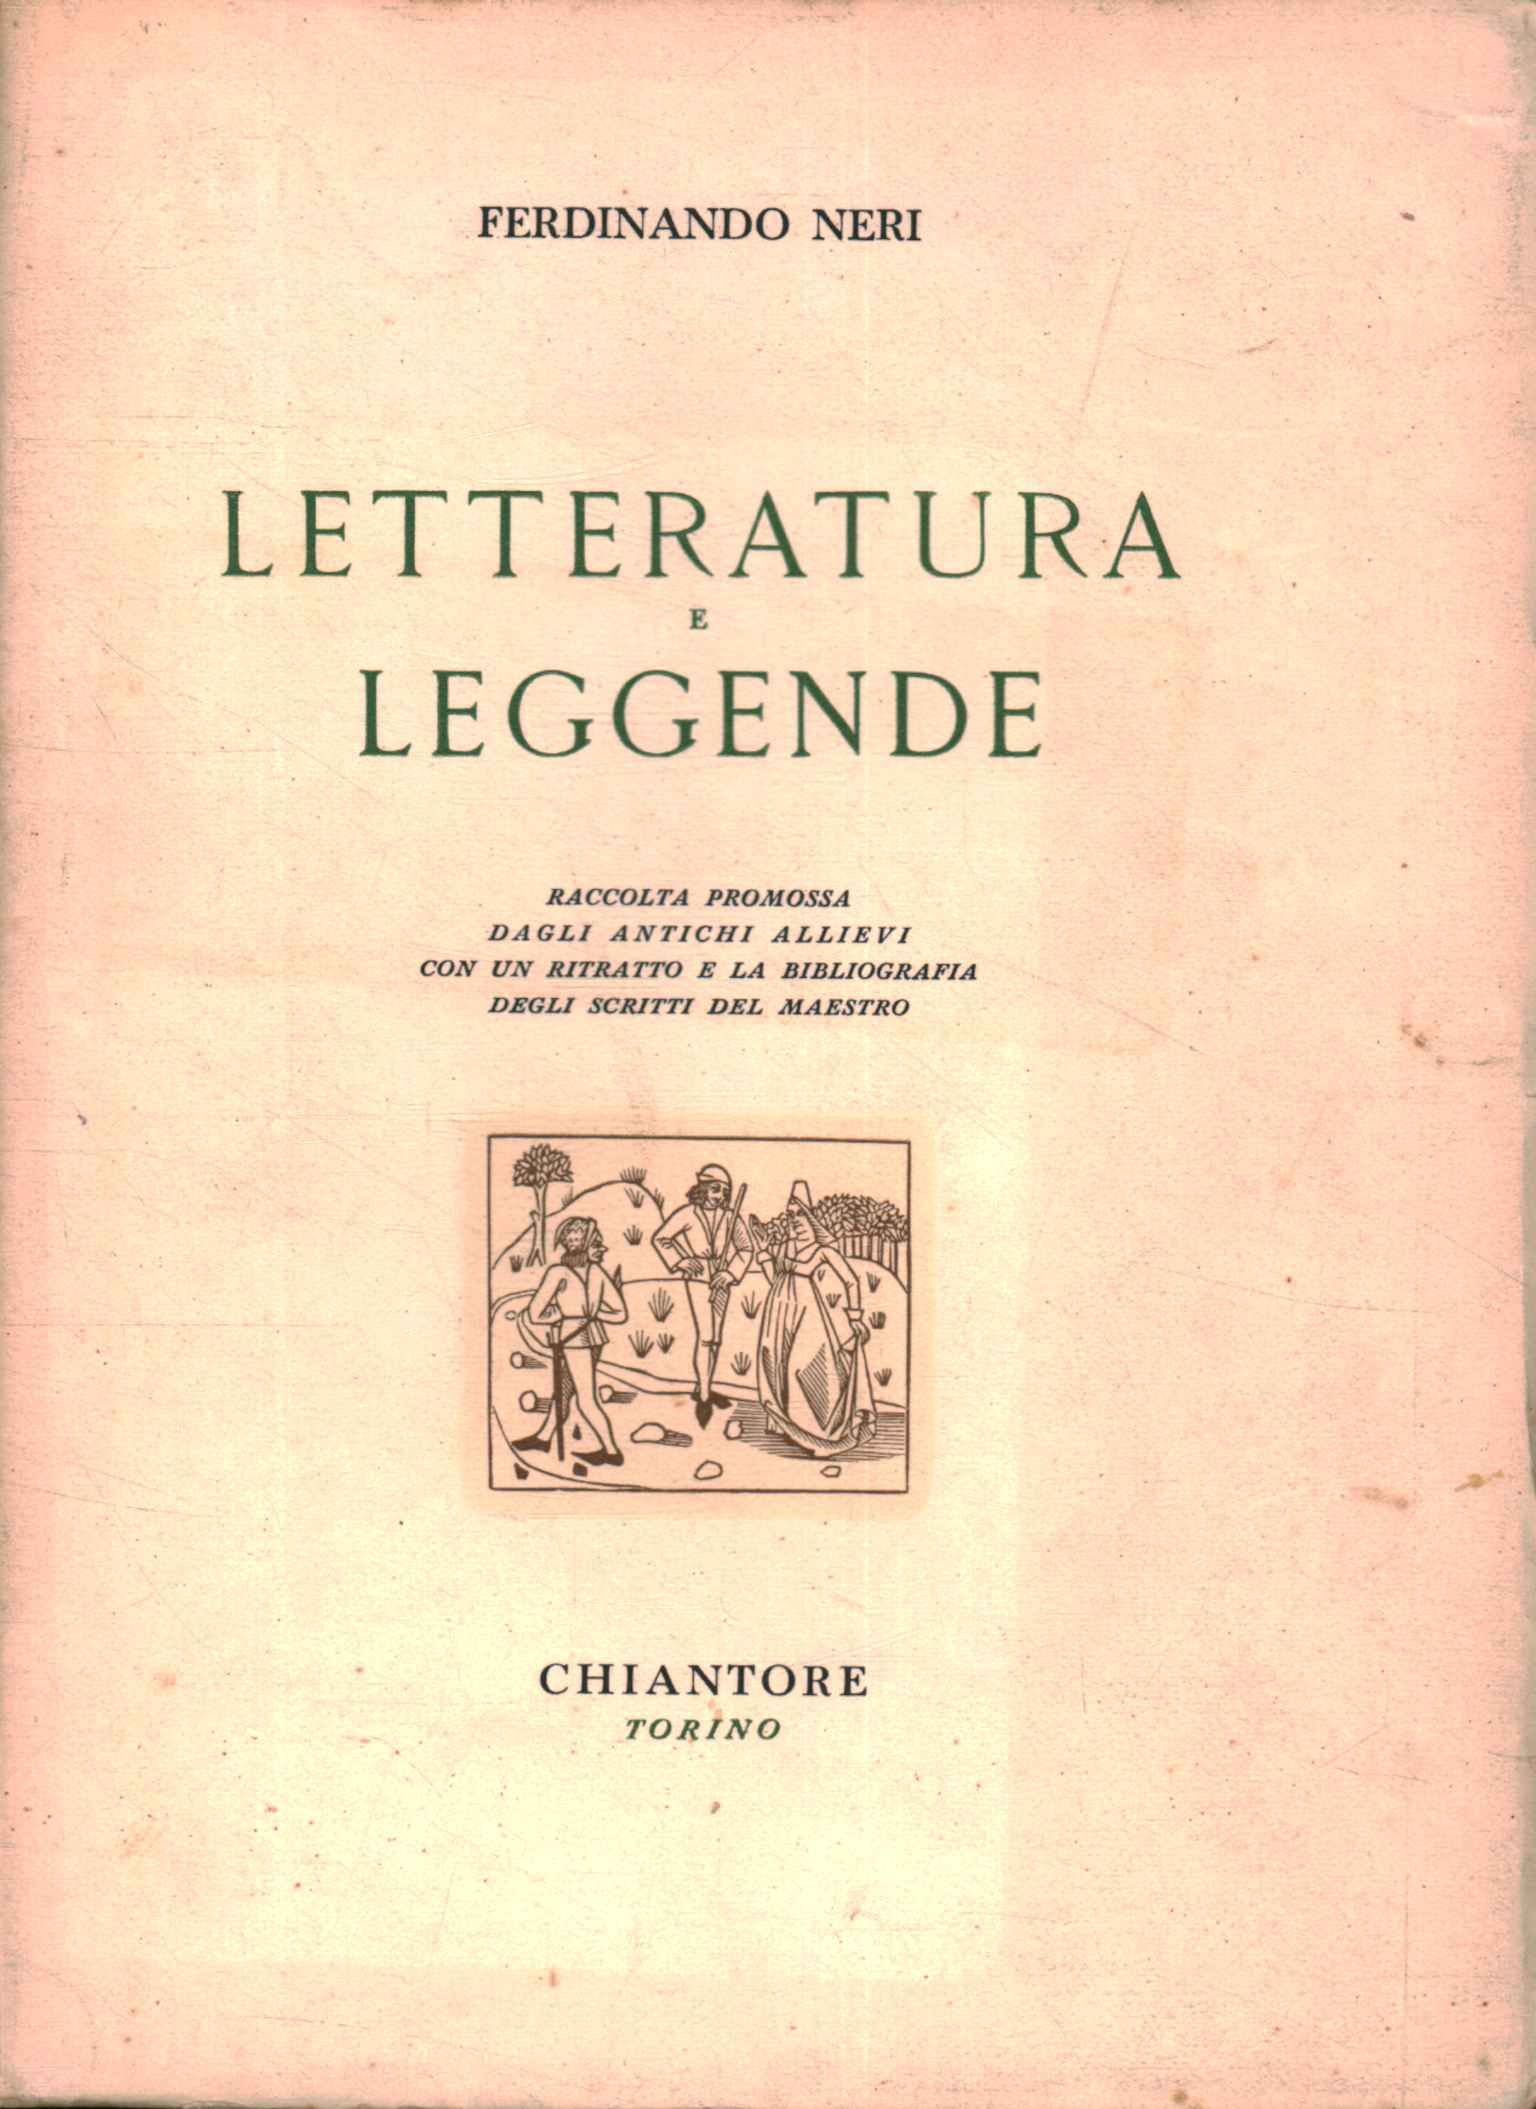 Literature and legends